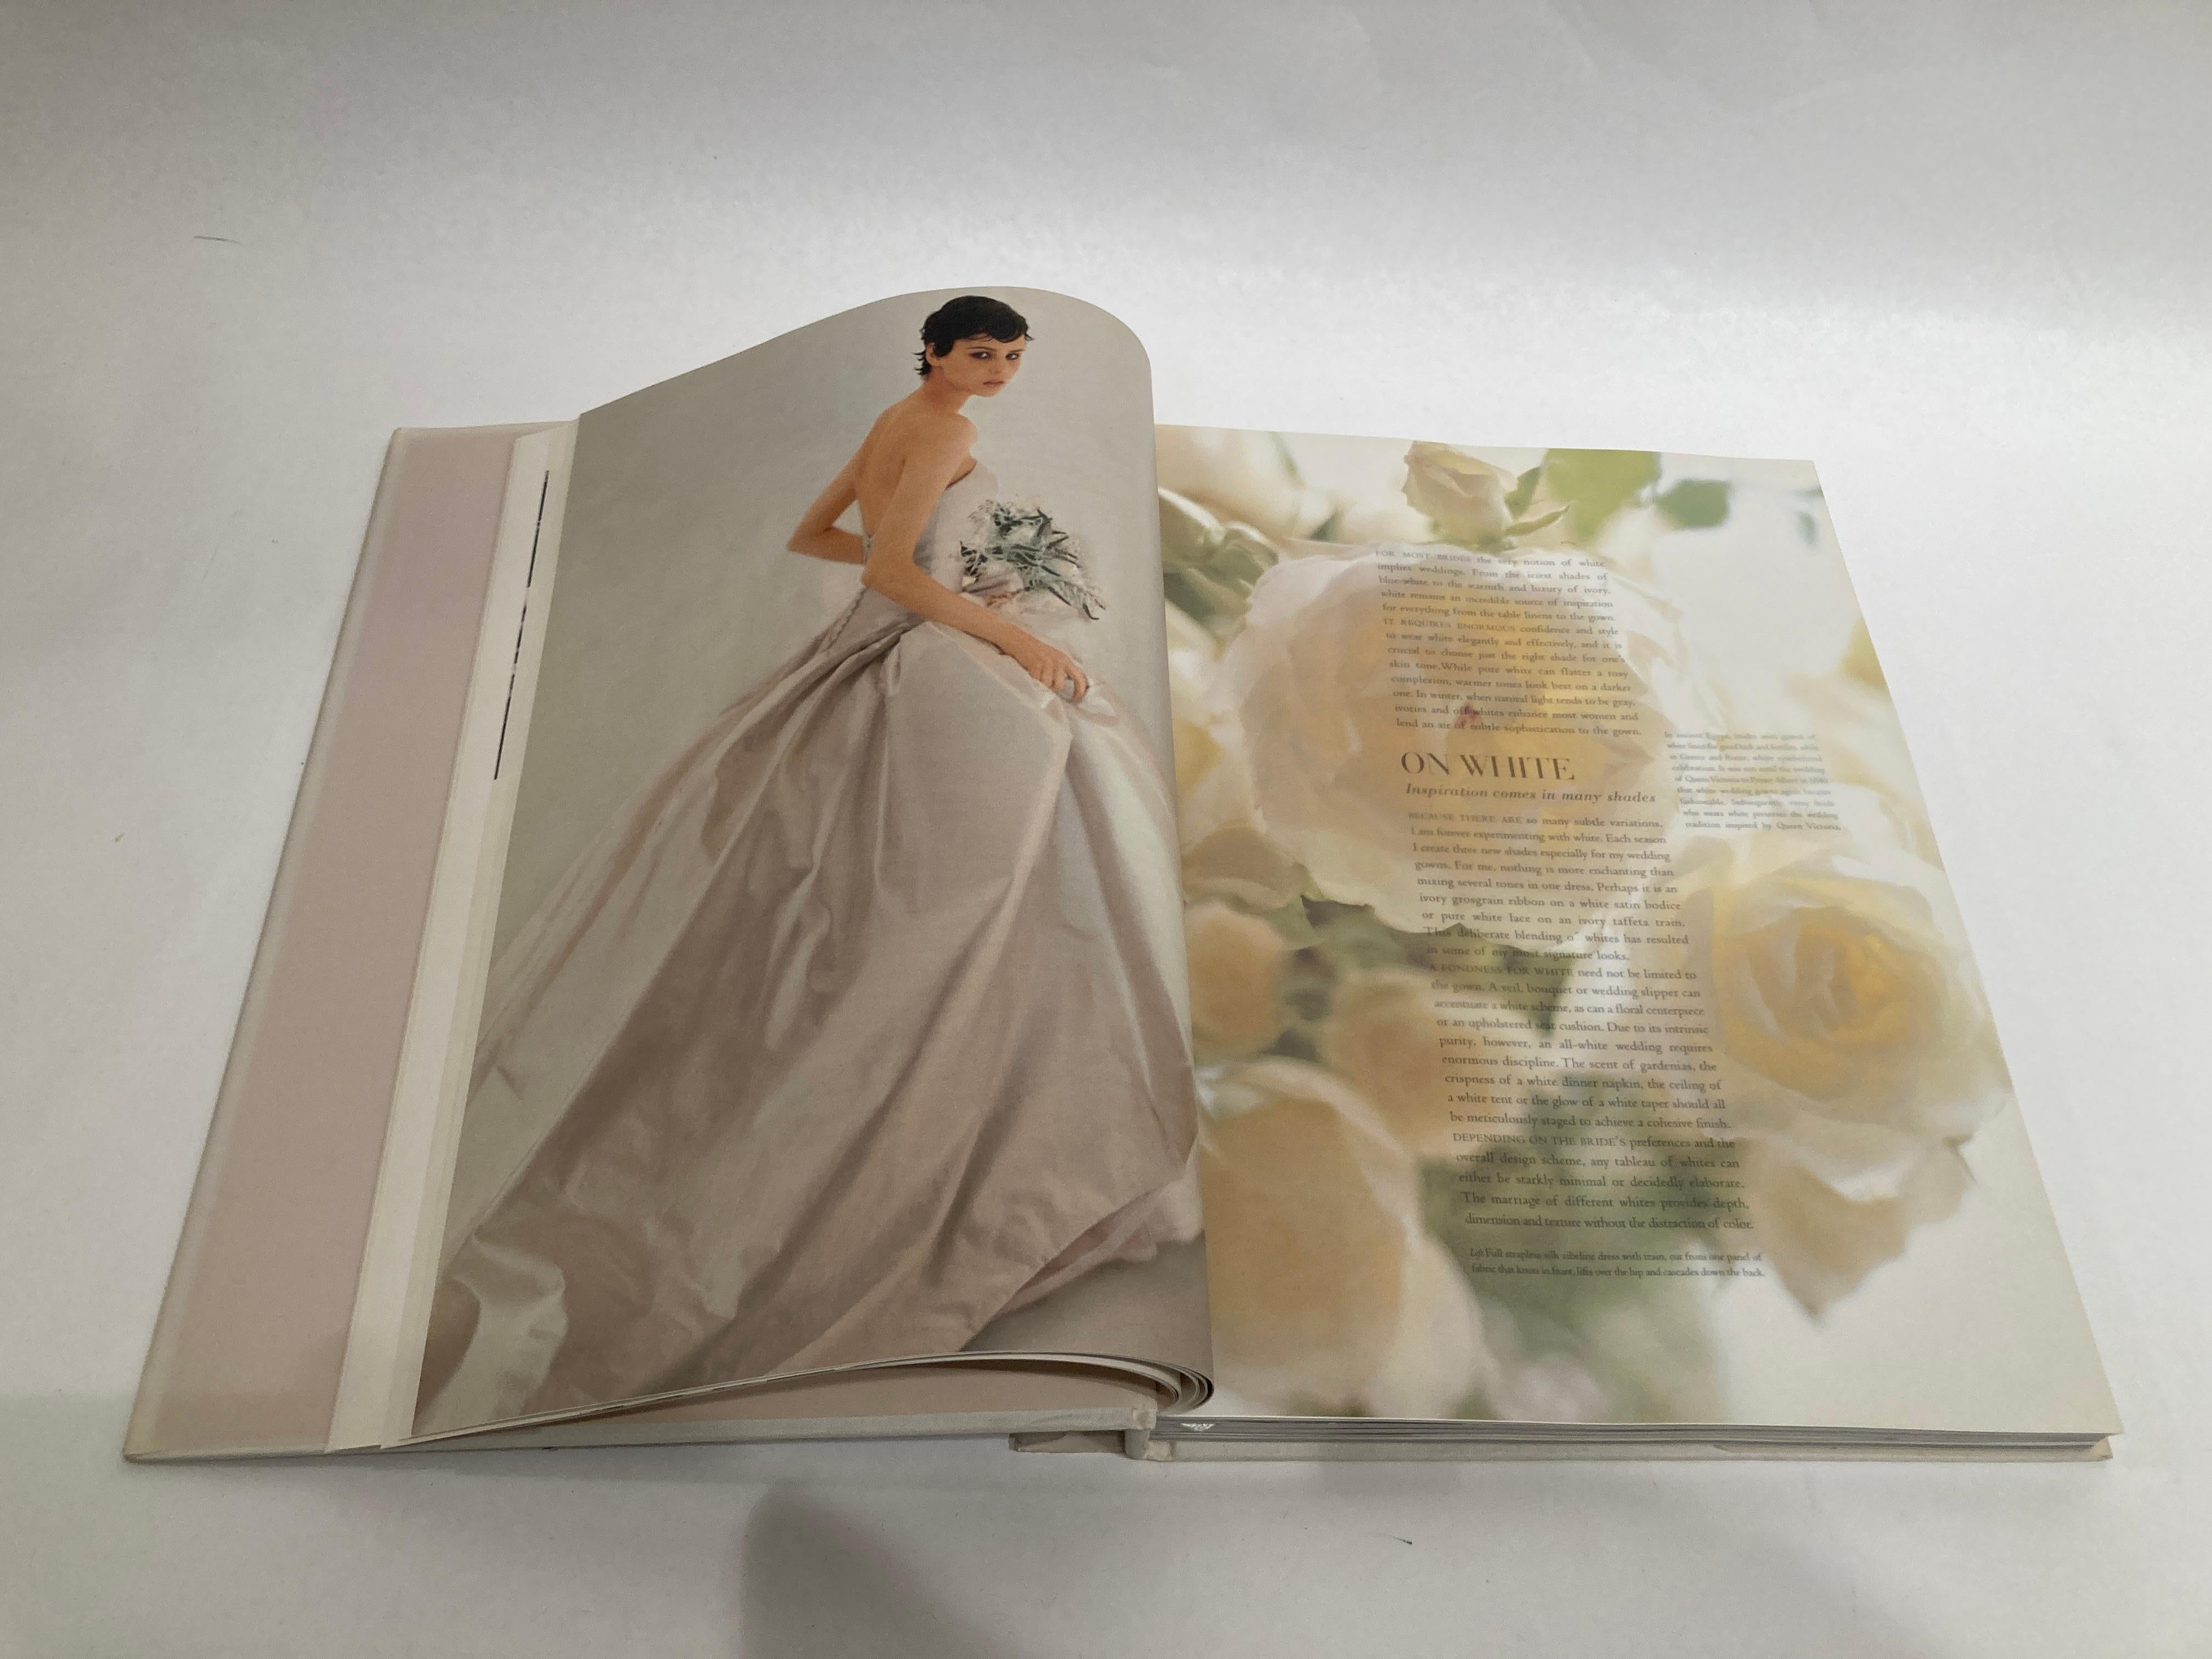 Vera Wang On Weddings by Vera Wang - Grand livre à couverture rigide en vente 1